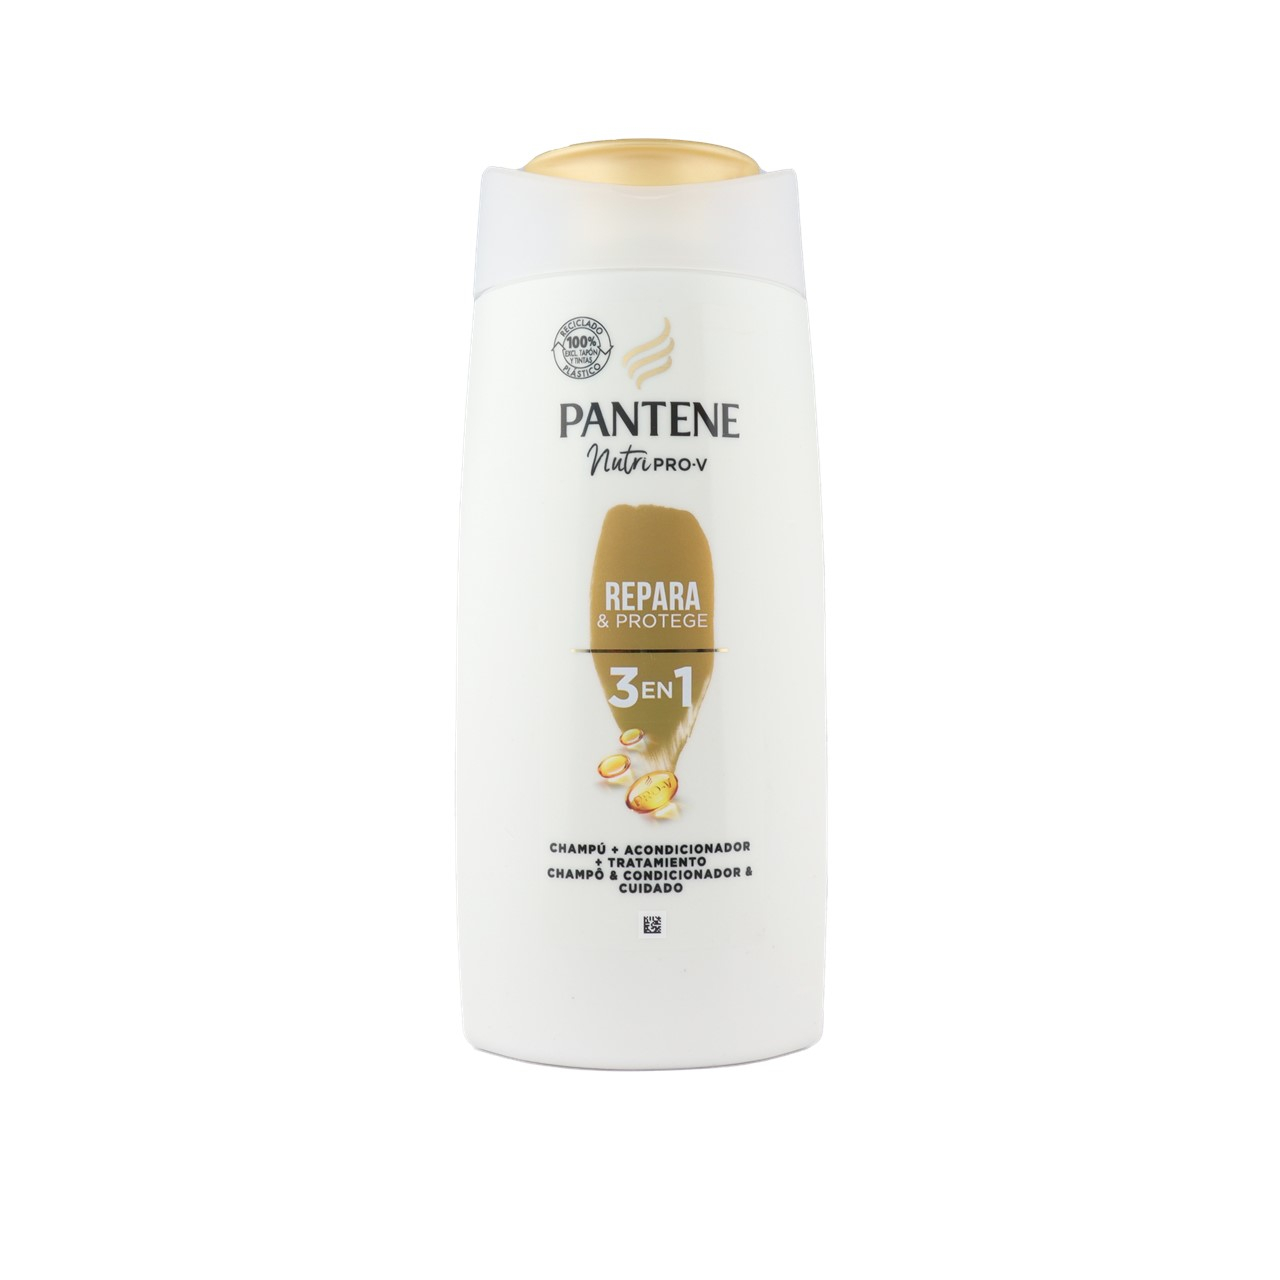 Pantene Nutri Pro-V Repair & Protect 3in1 Shampoo 675ml (22.82fl oz)